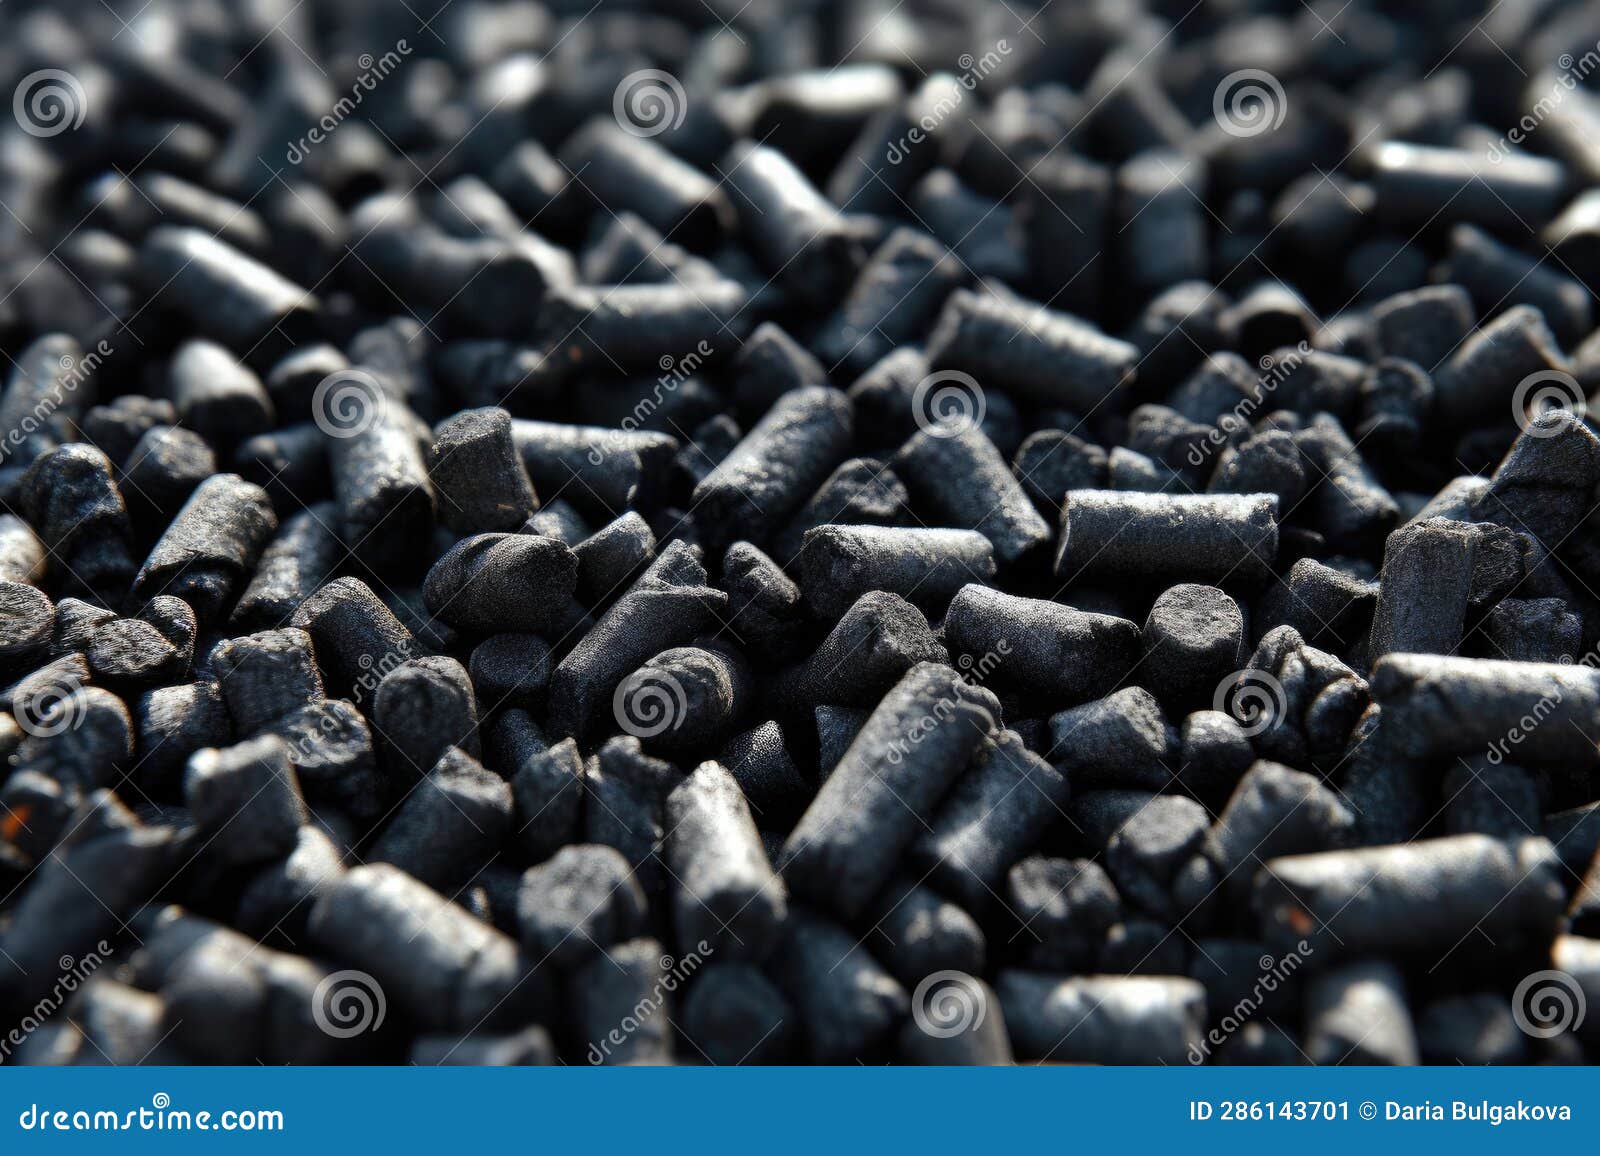 black granules biochar pellets. organic biochar derived made from woody material through pyrolysis. biochar increases the carbon